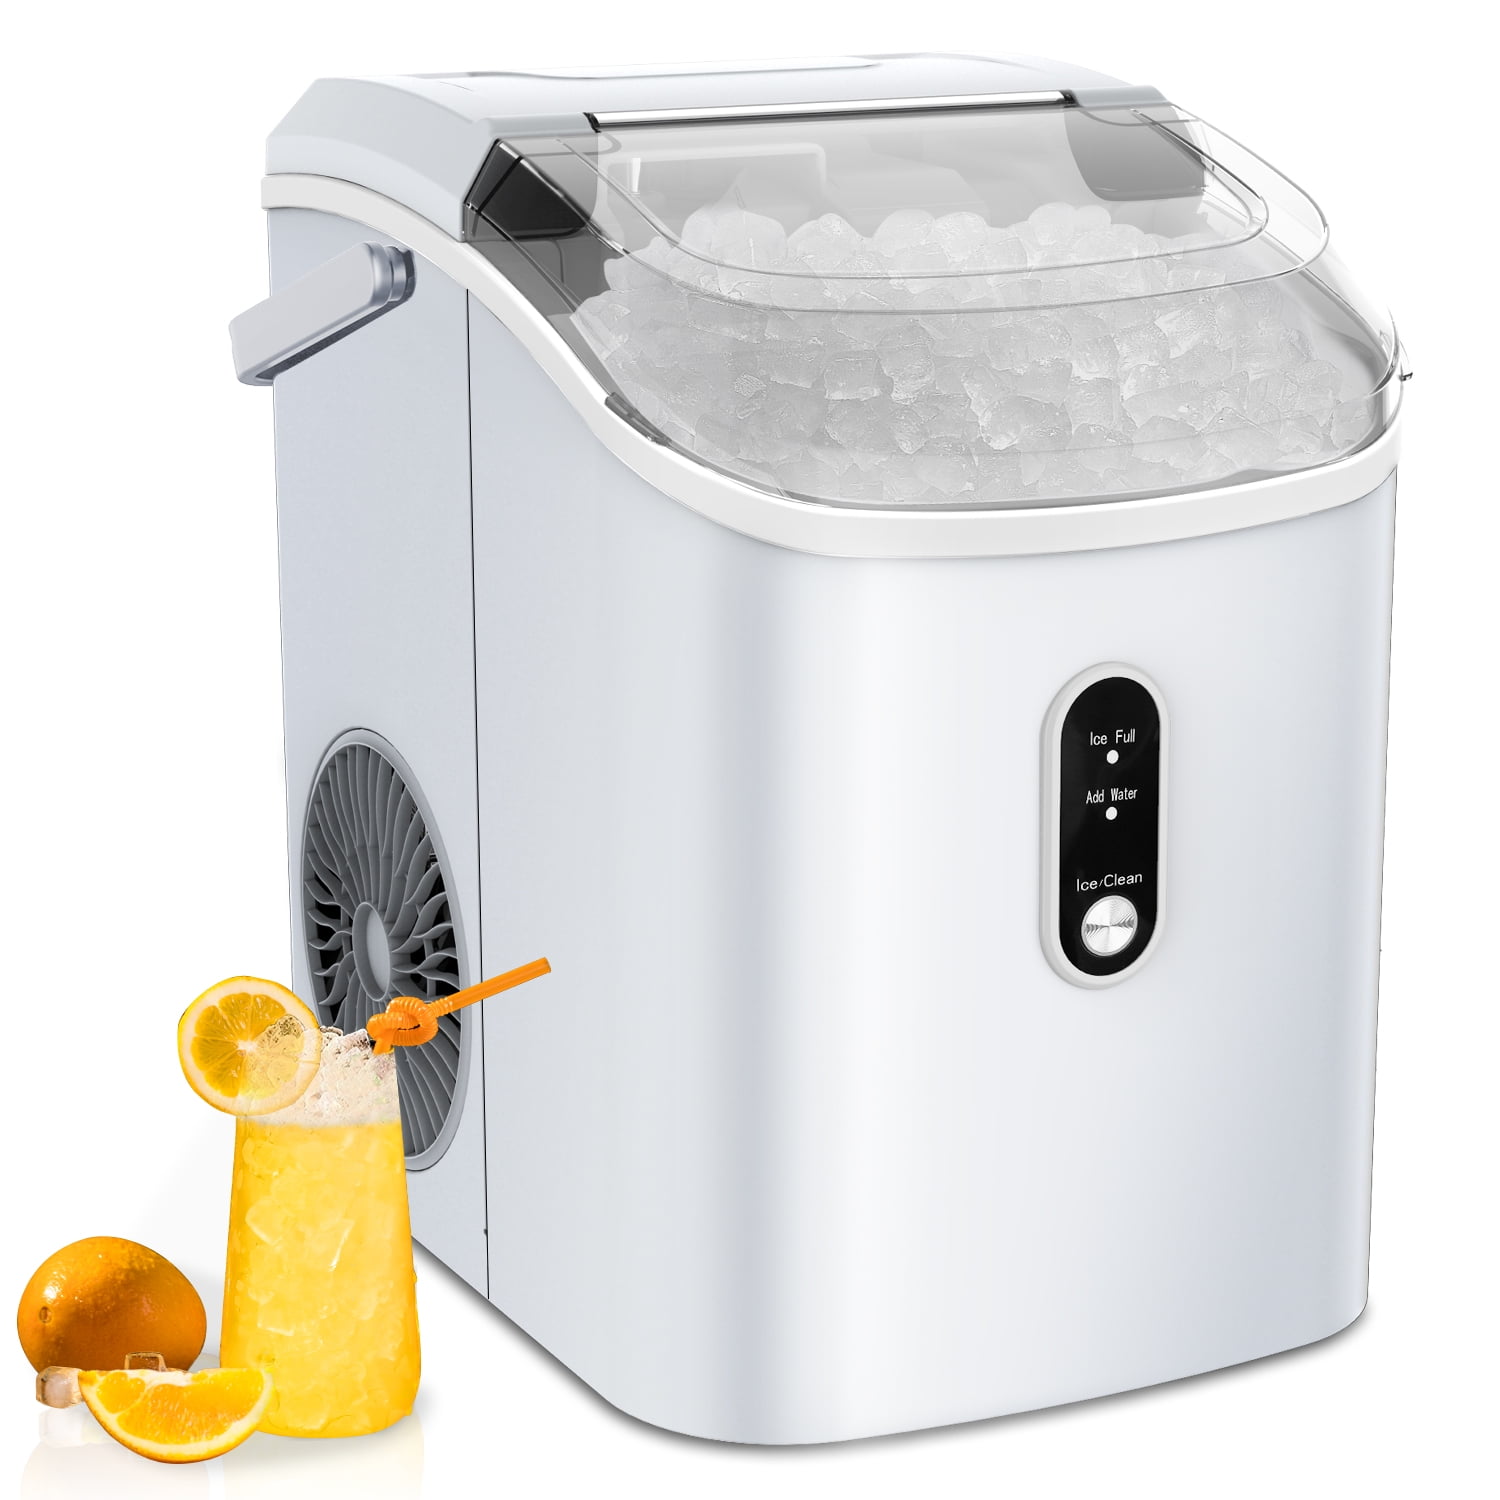 🚨Huge Deal Alert!🚨 COWSAR Nugget Ice Machine: Enjoy Premium